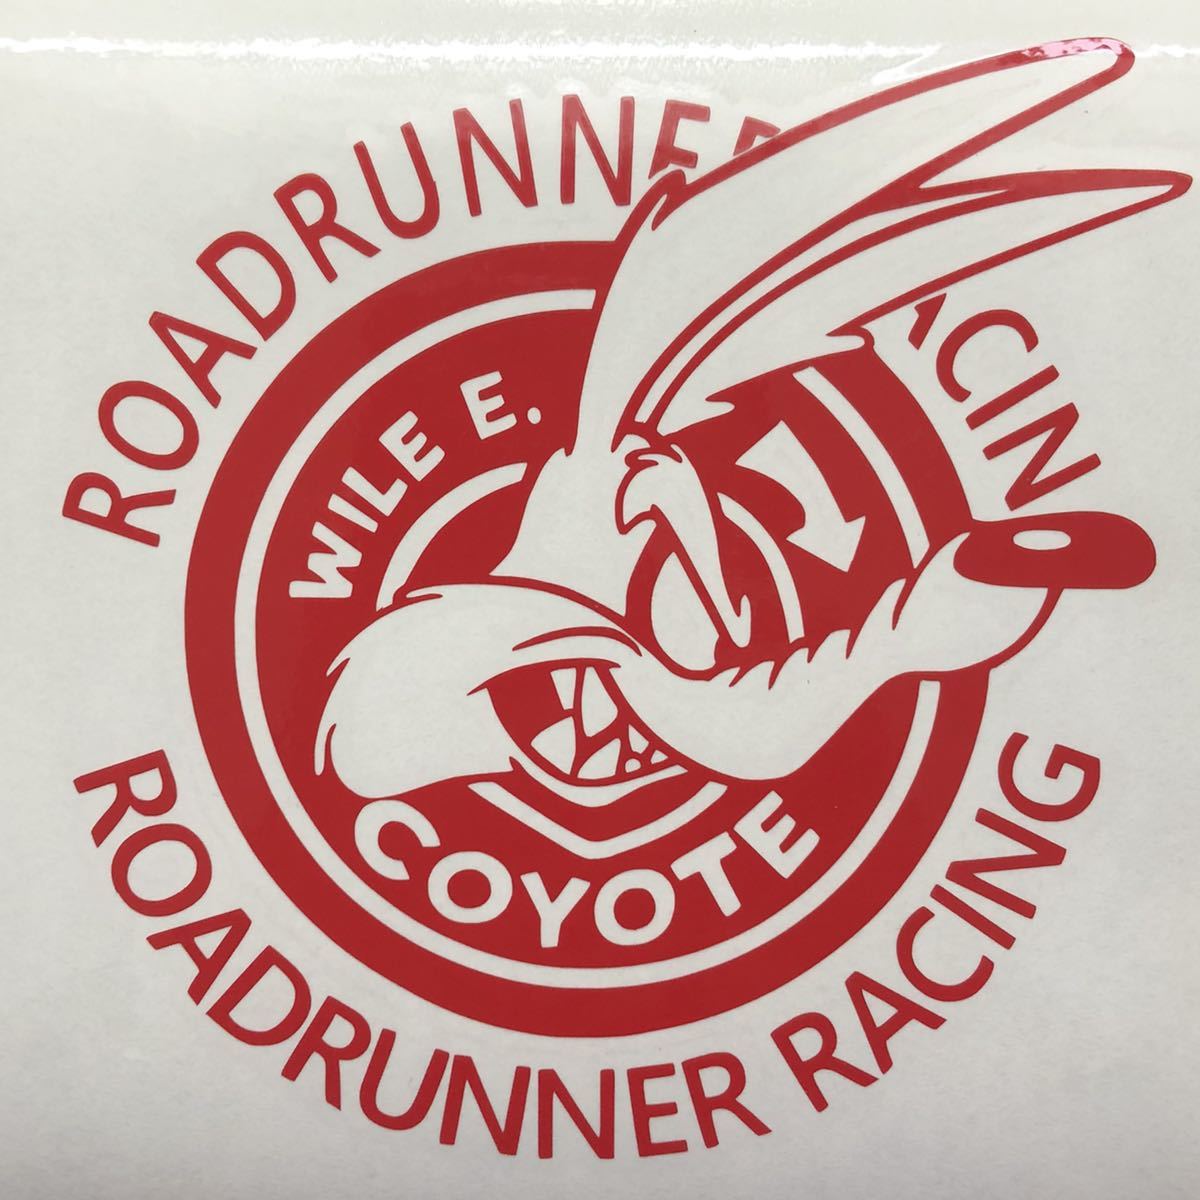  стикер Roadrunner. койот Wile E. Coyote красный ROADRUNNER RACING